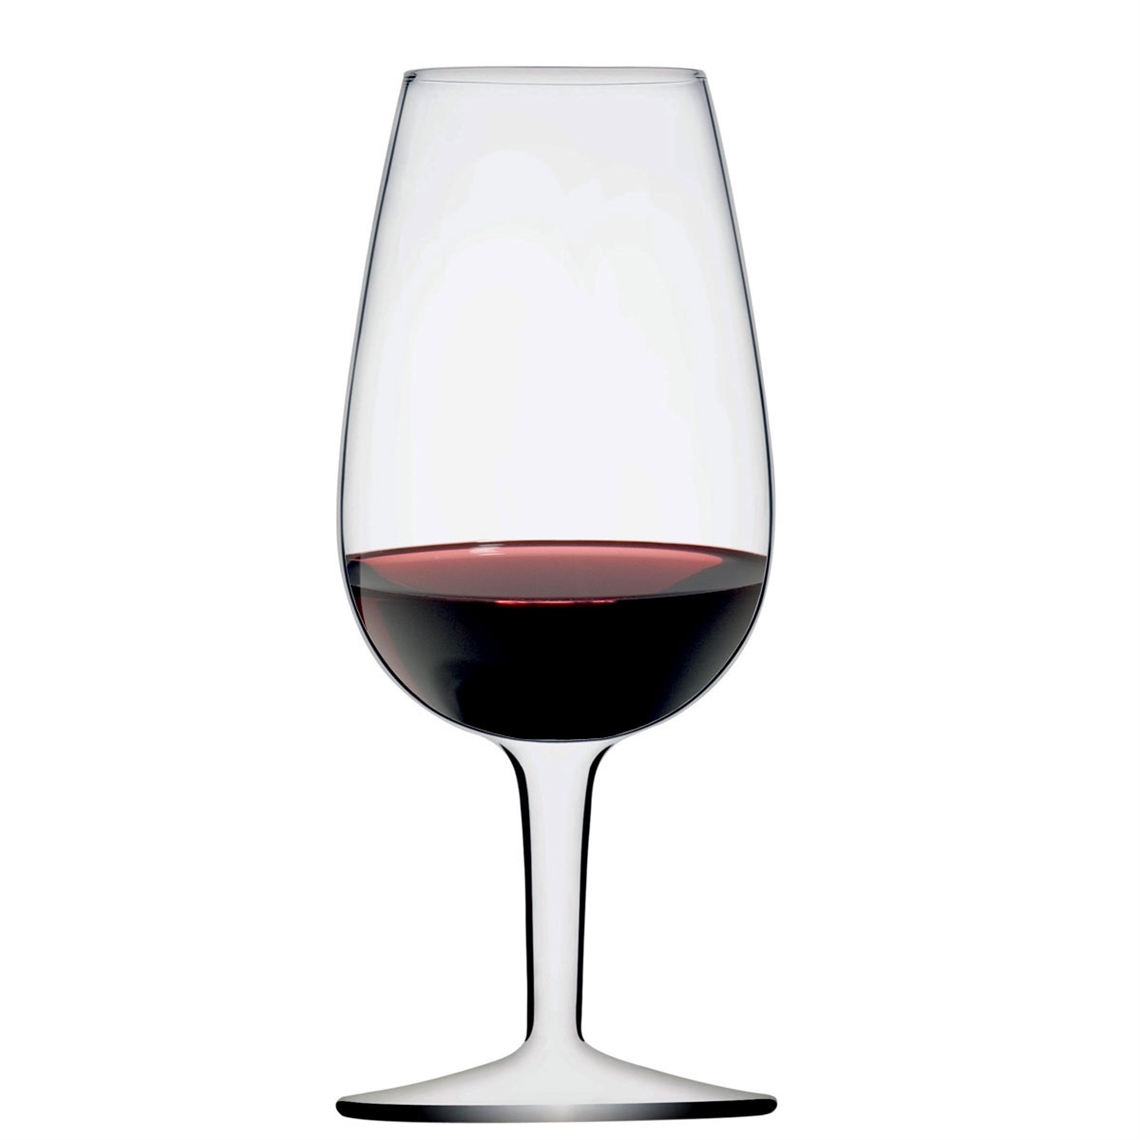 View more le nez du vin from our Wine Tasting Glasses range